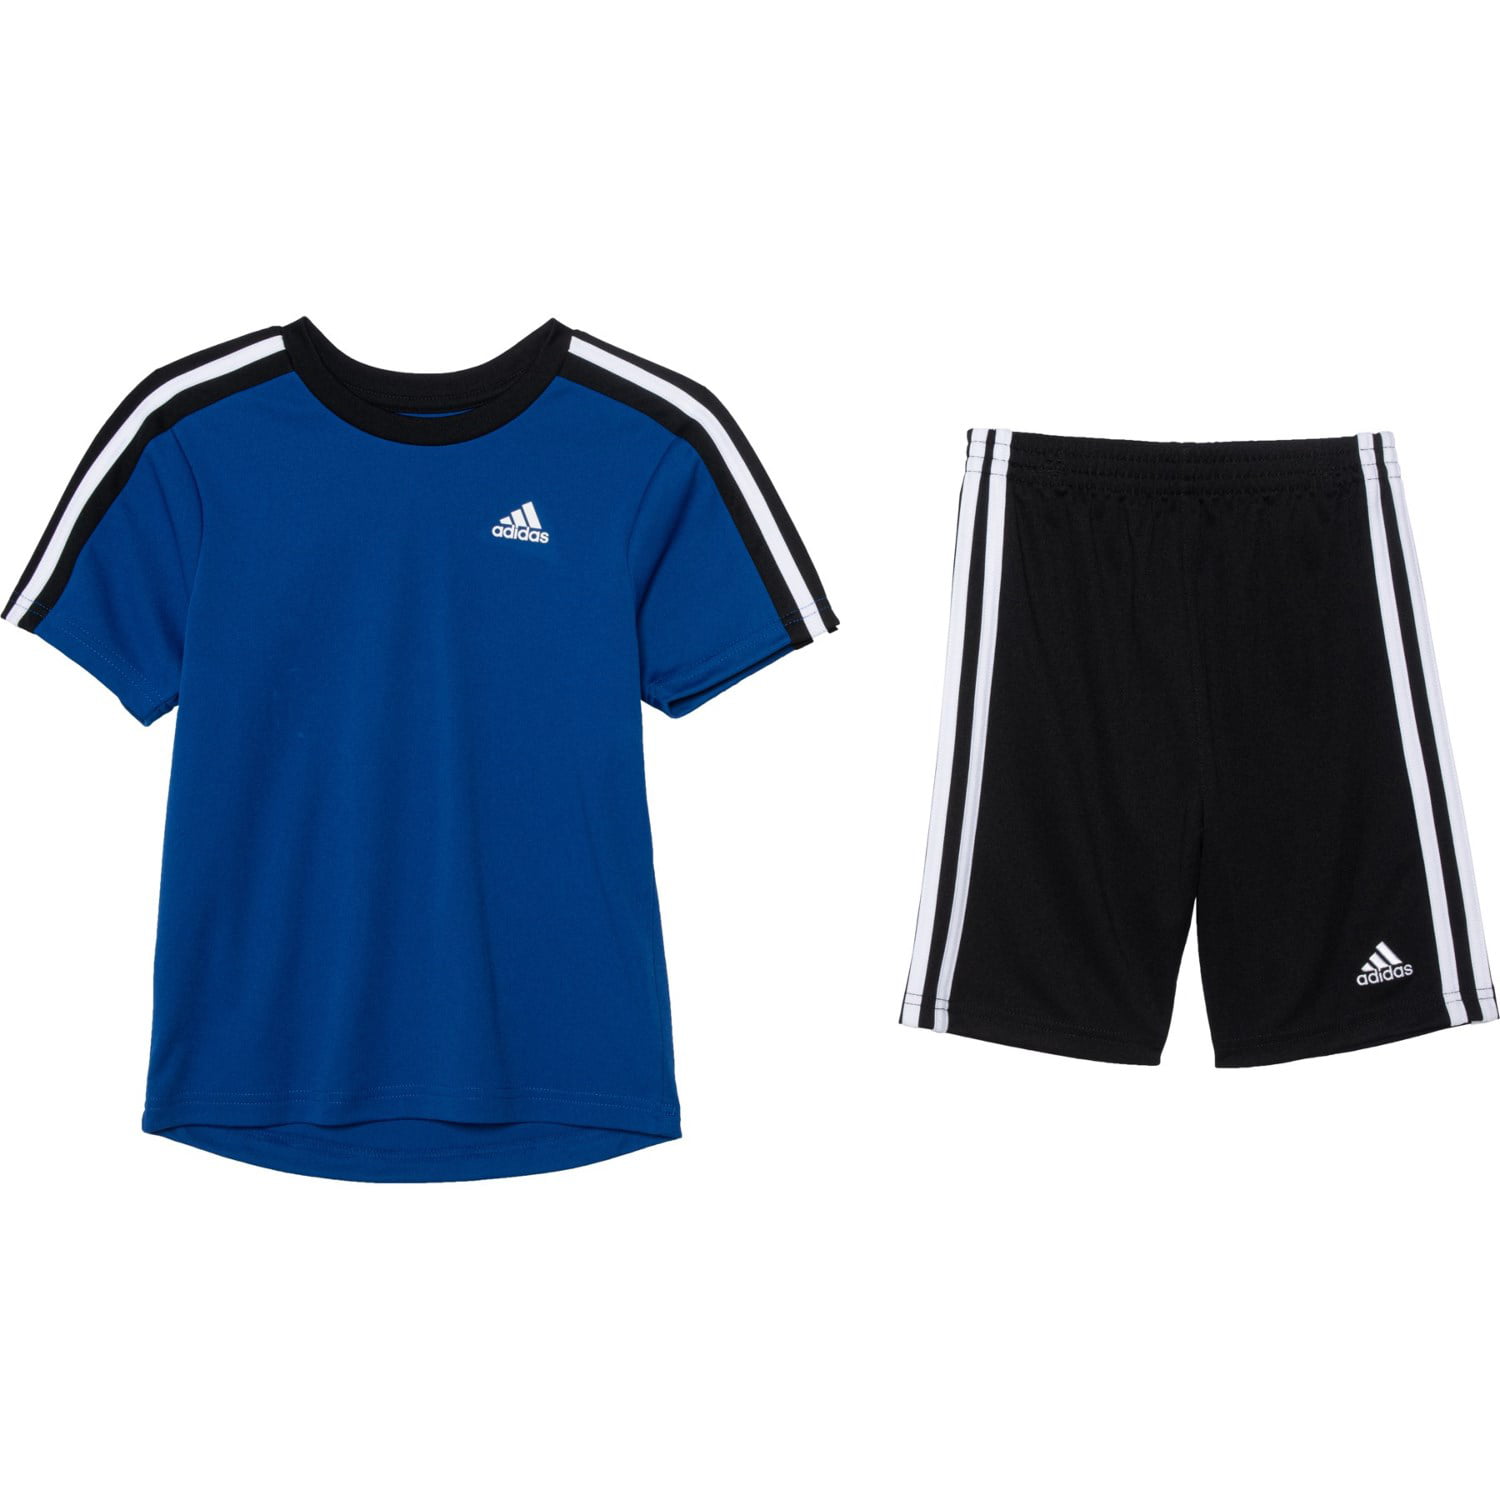 Adidas Boys' T-Shirt and Short Sets - Short Sleeves - Sizes 4, 5, and 6 ...